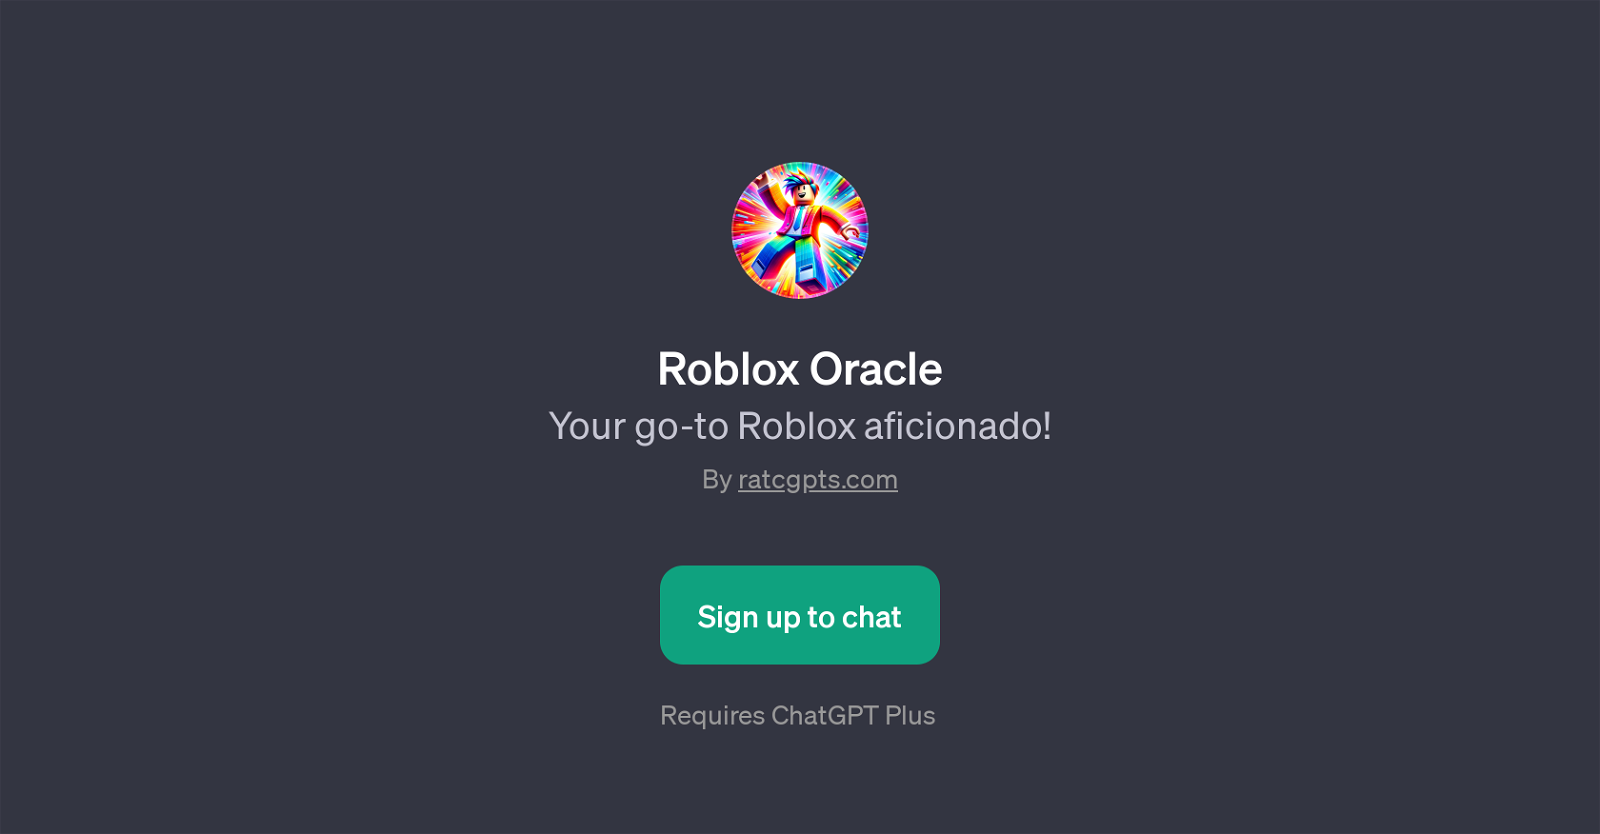 Roblox Oracle website